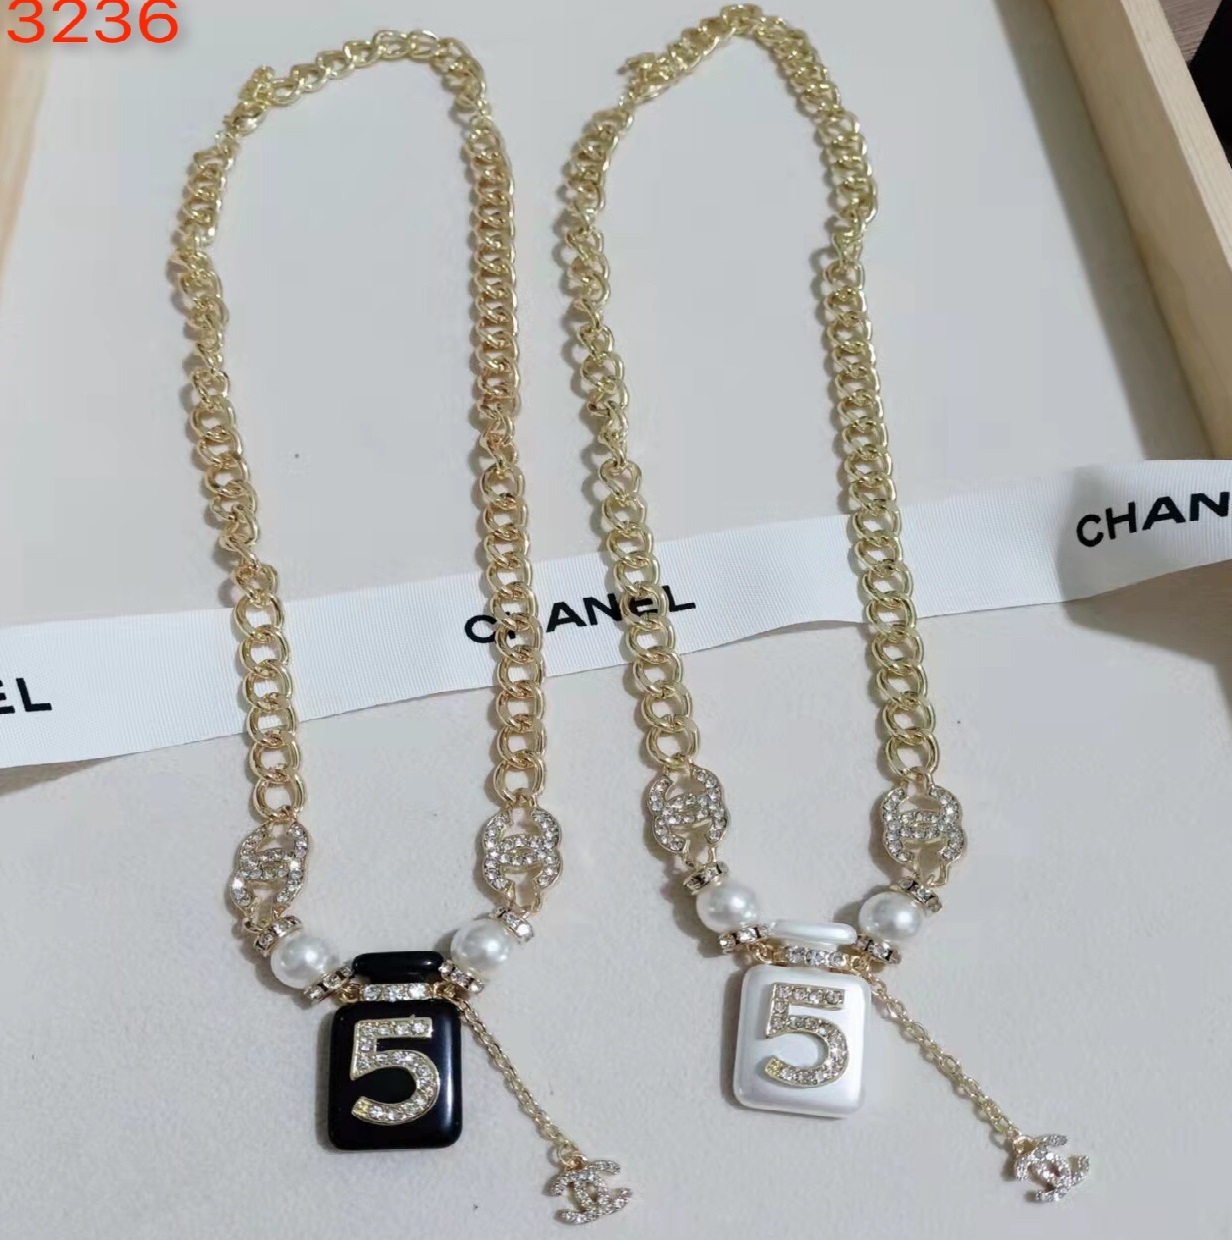 Chanel necklace baublebar 109143